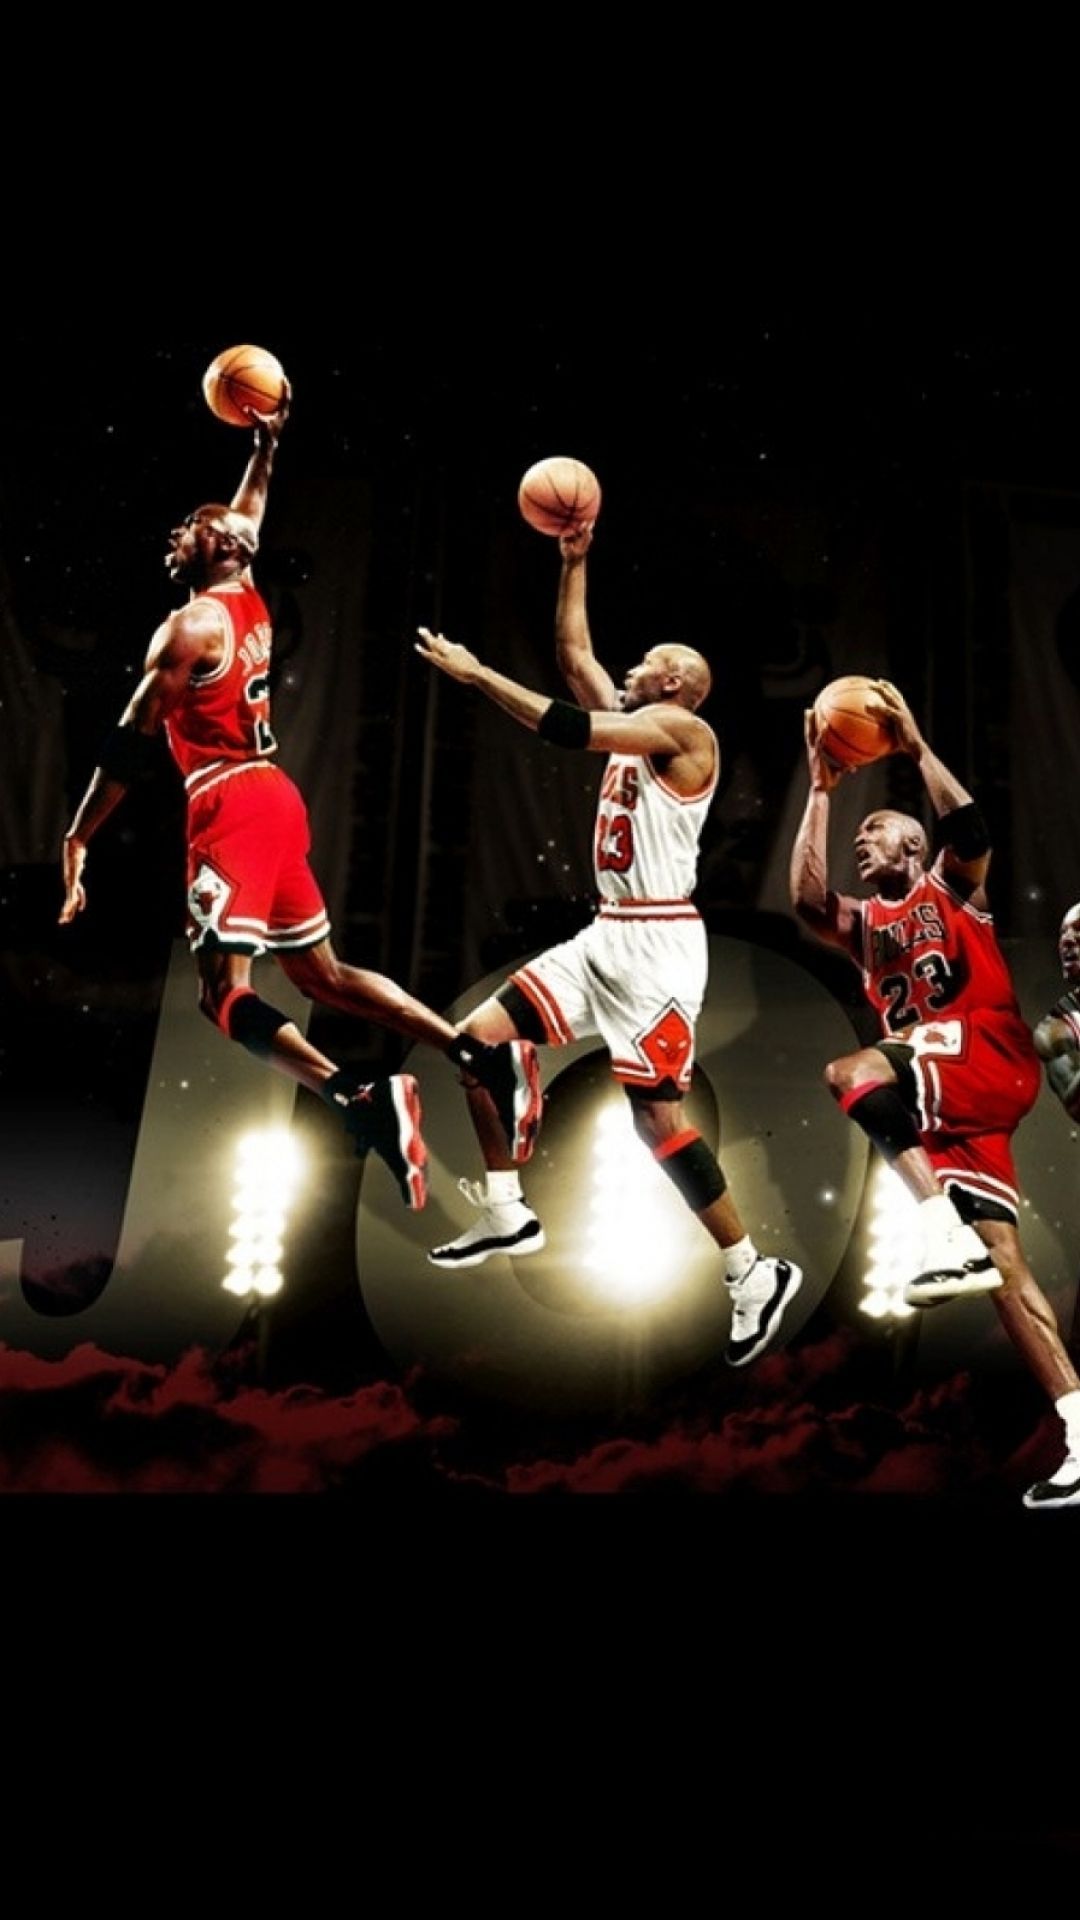 IPhone 6 Plus - Sports / Michael Jordan - Wallpaper ID 517830